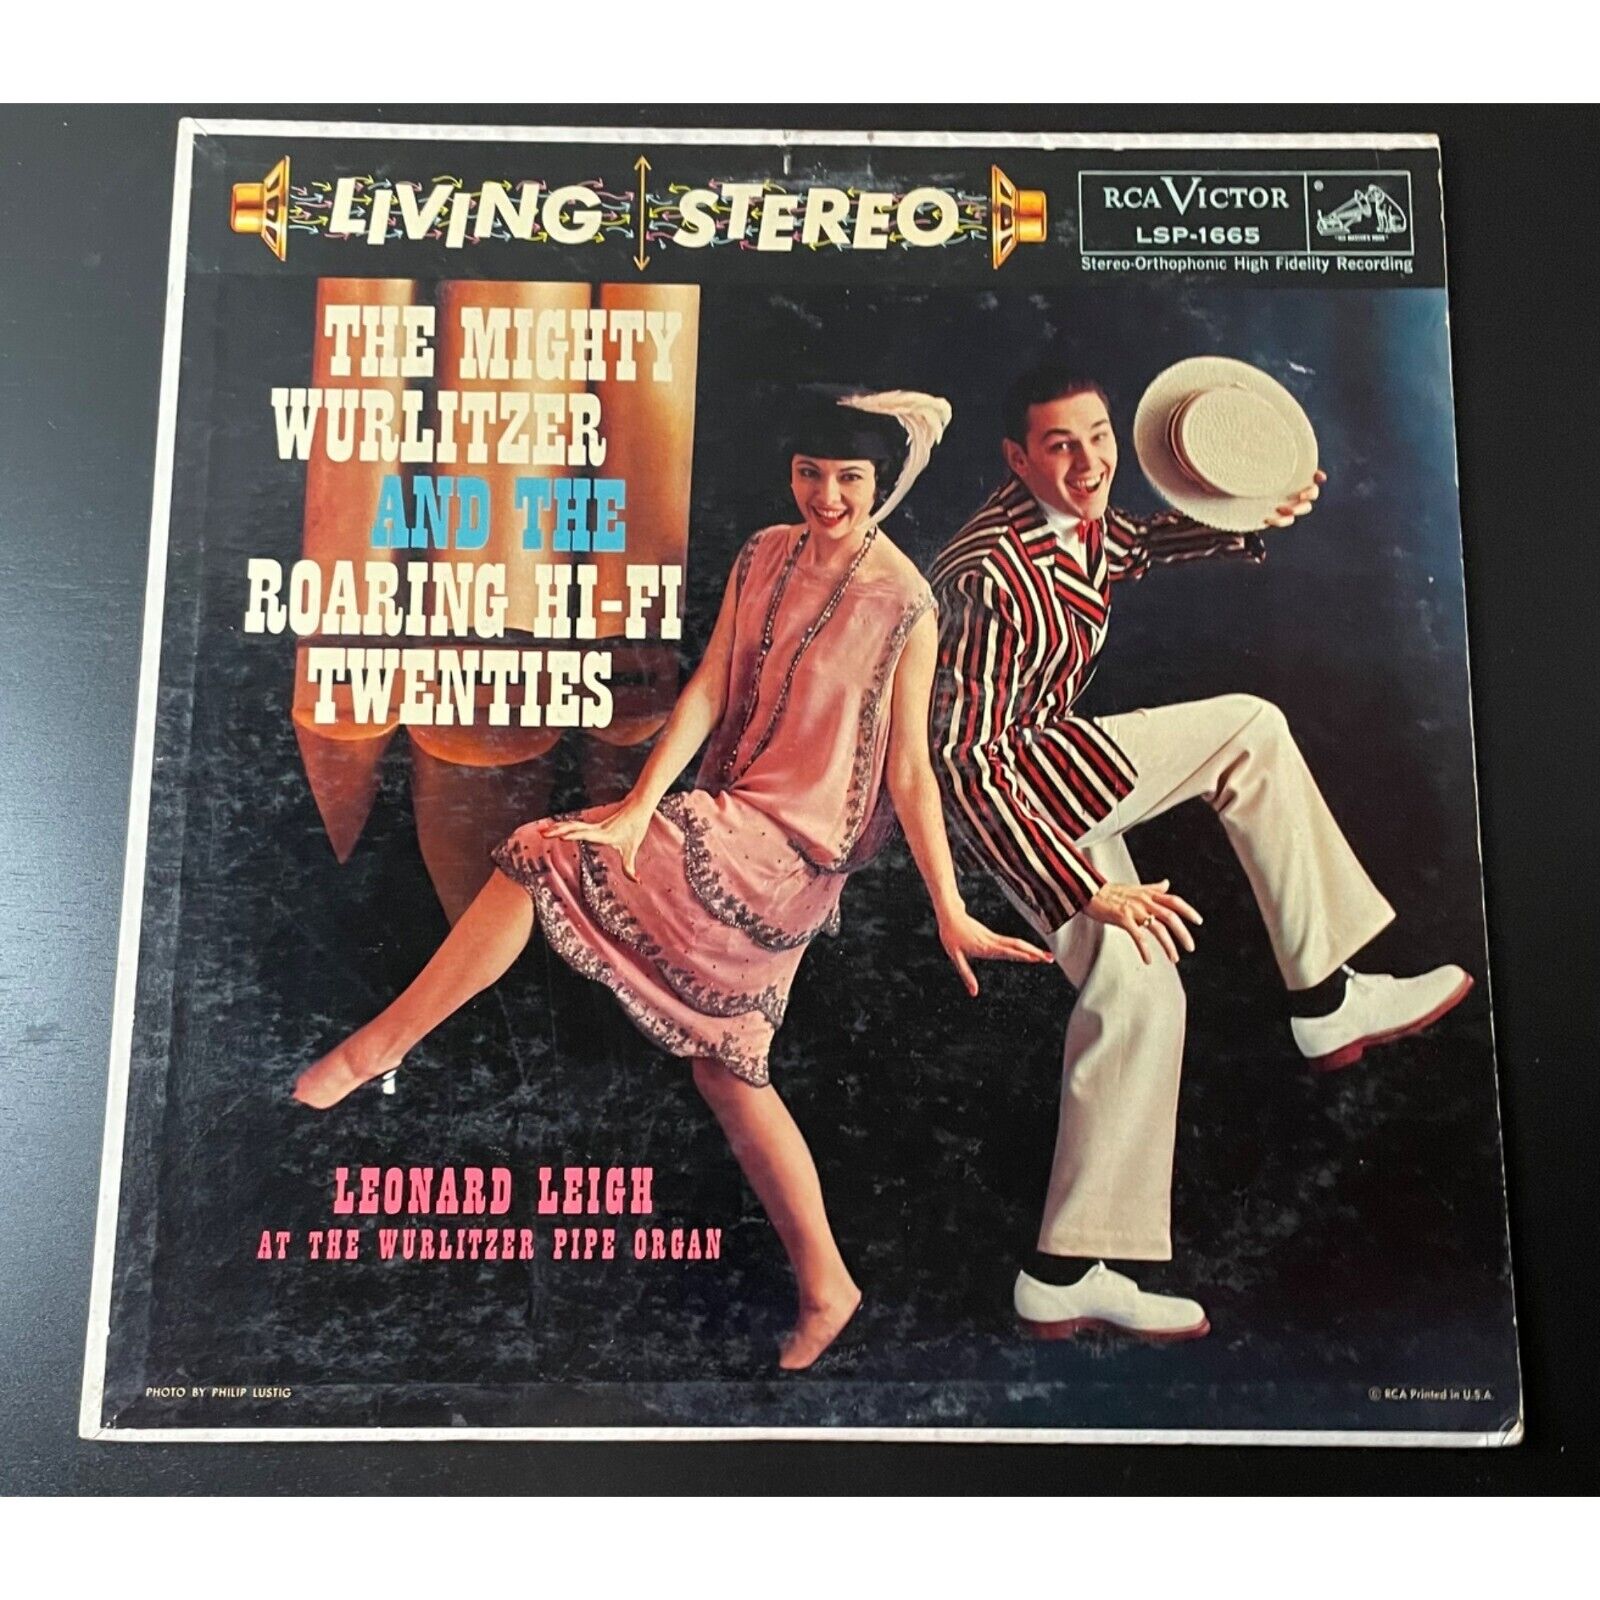 Leonard Leigh Mighty Wurlitzer & the Roaring Hi-Fi 20s Vinyl RCA 1958 LSP1665